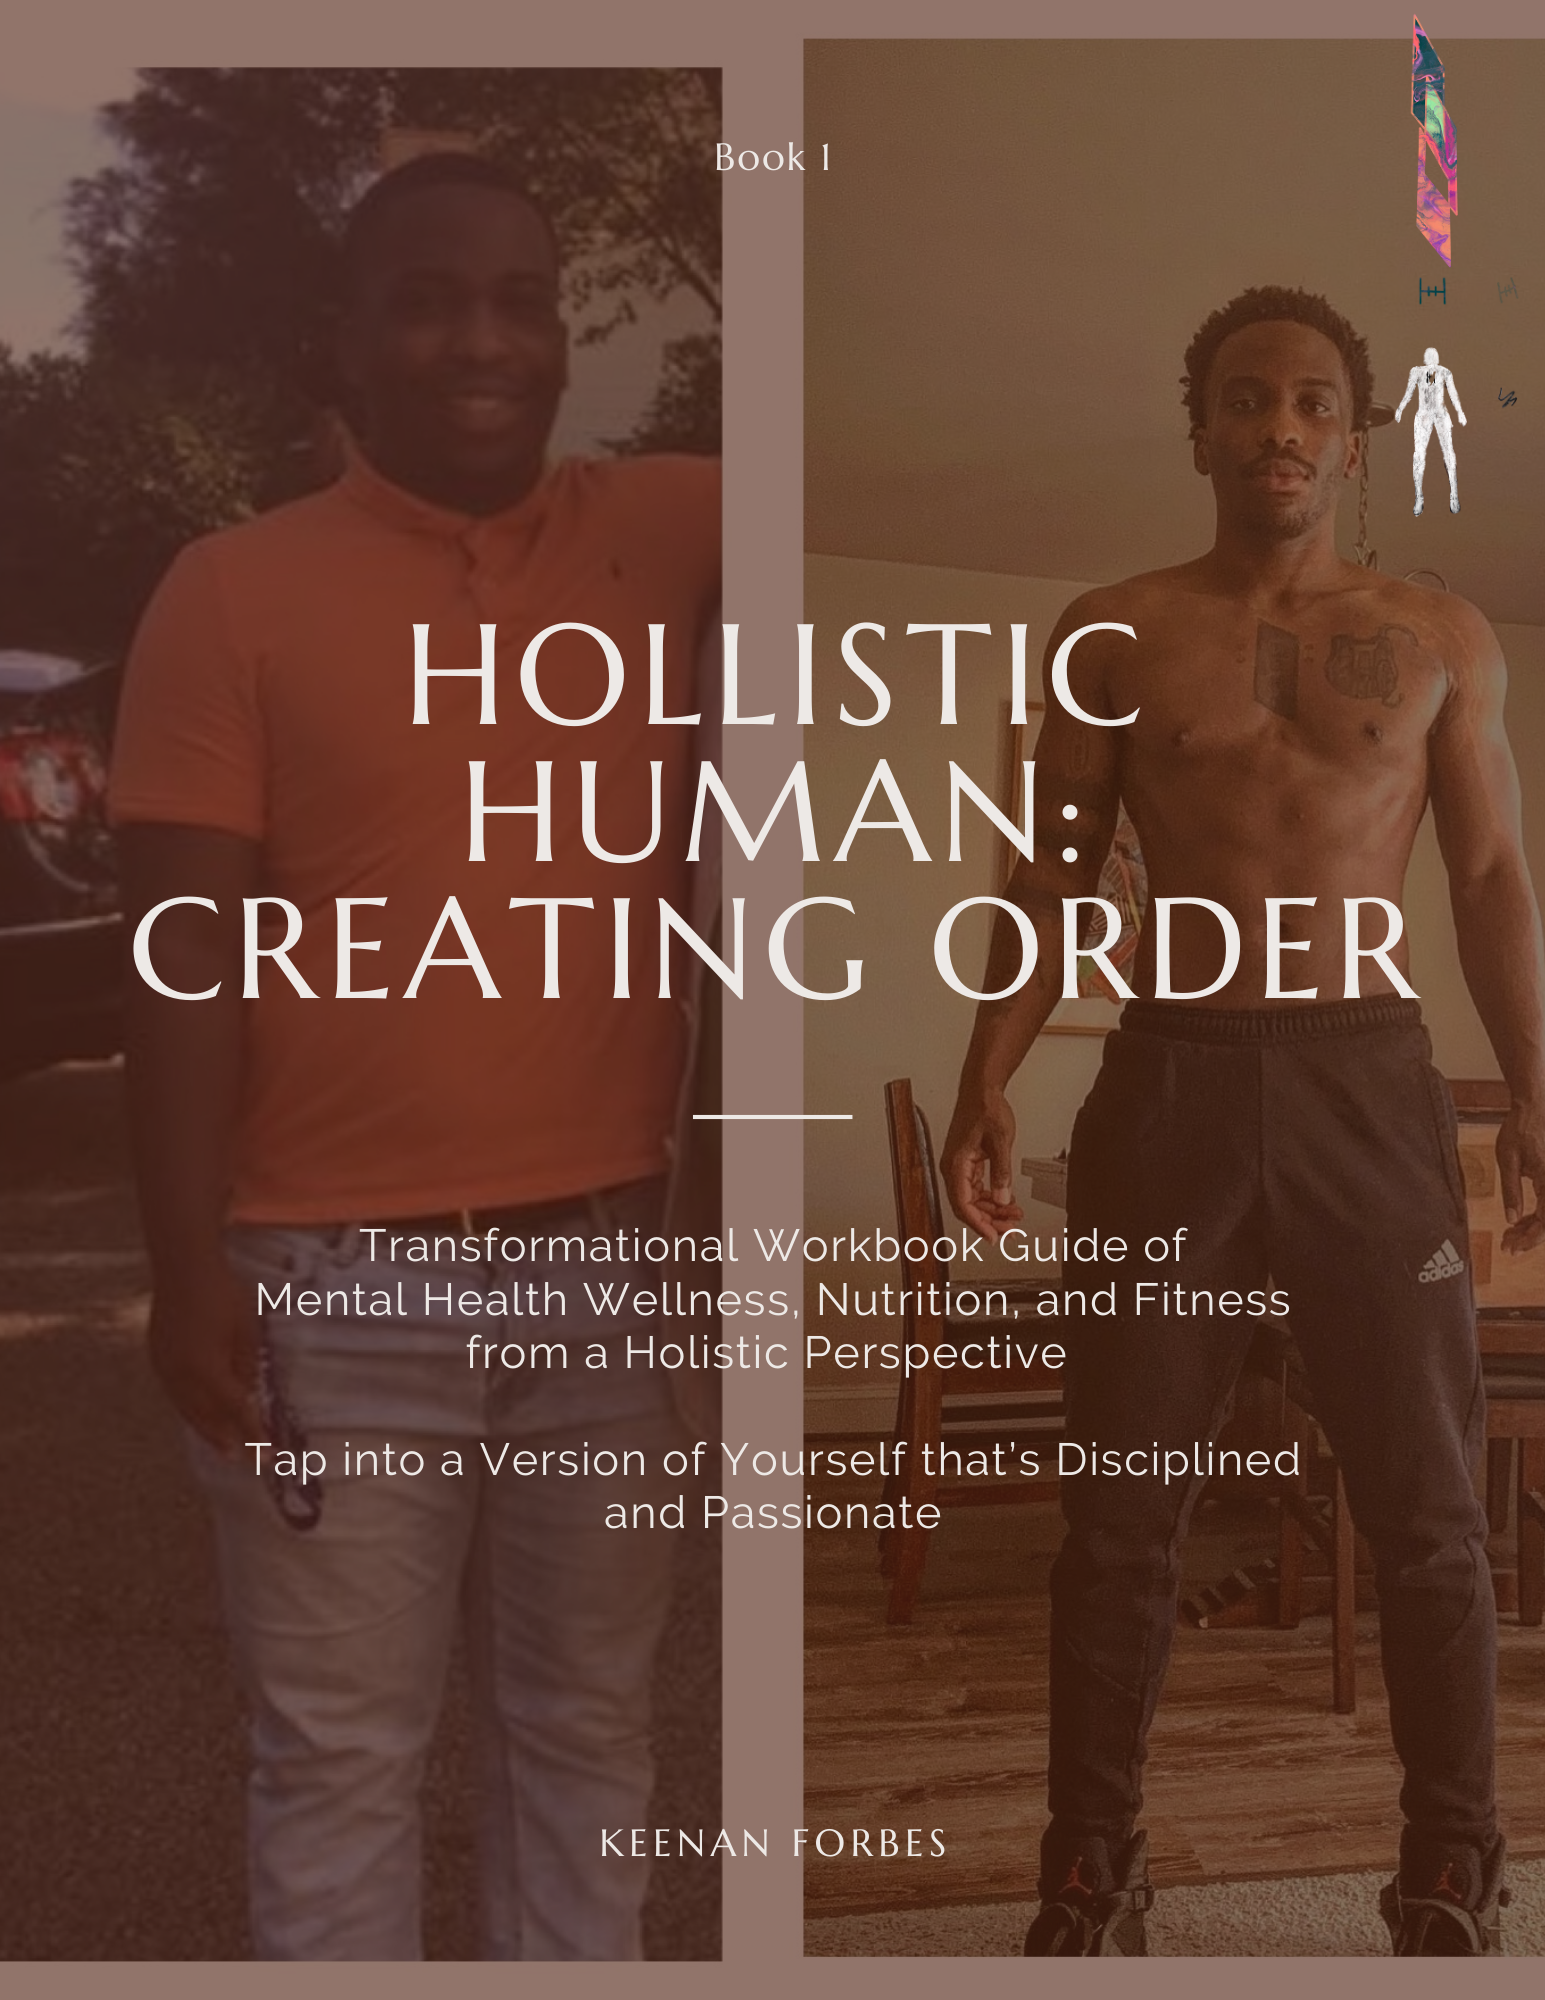 Transformational Self Improvement, Weight Loss, Health and Wellness E-Workbook Download | Hollistic Human: Creating Order